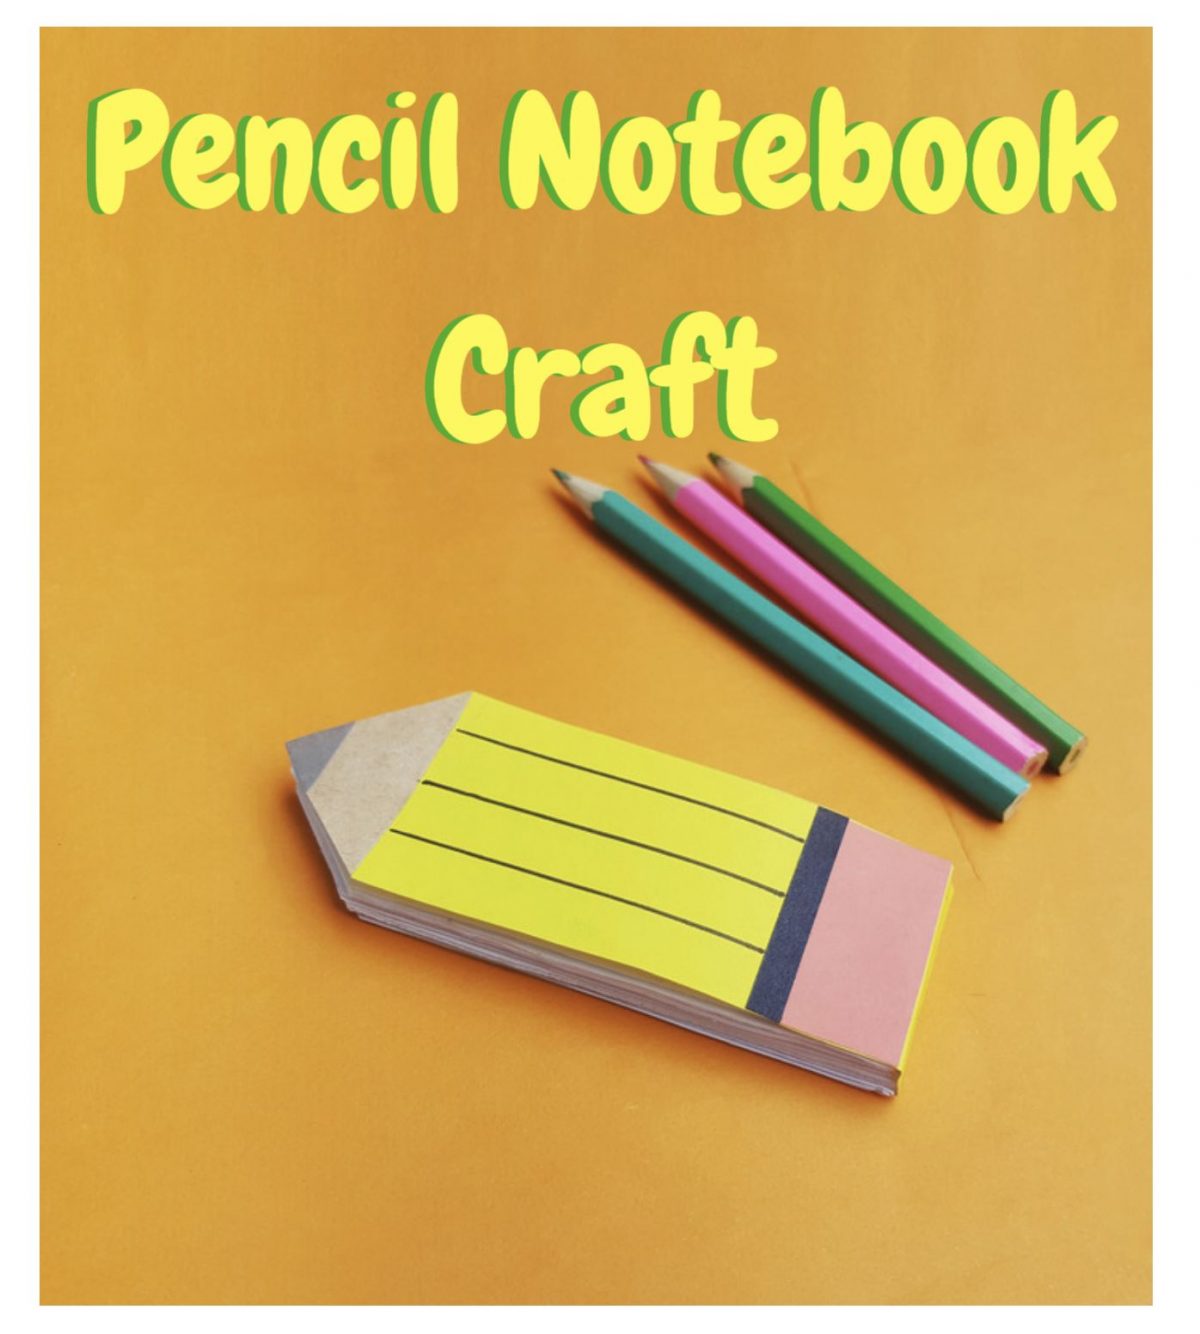 Pencil Notebook Craft